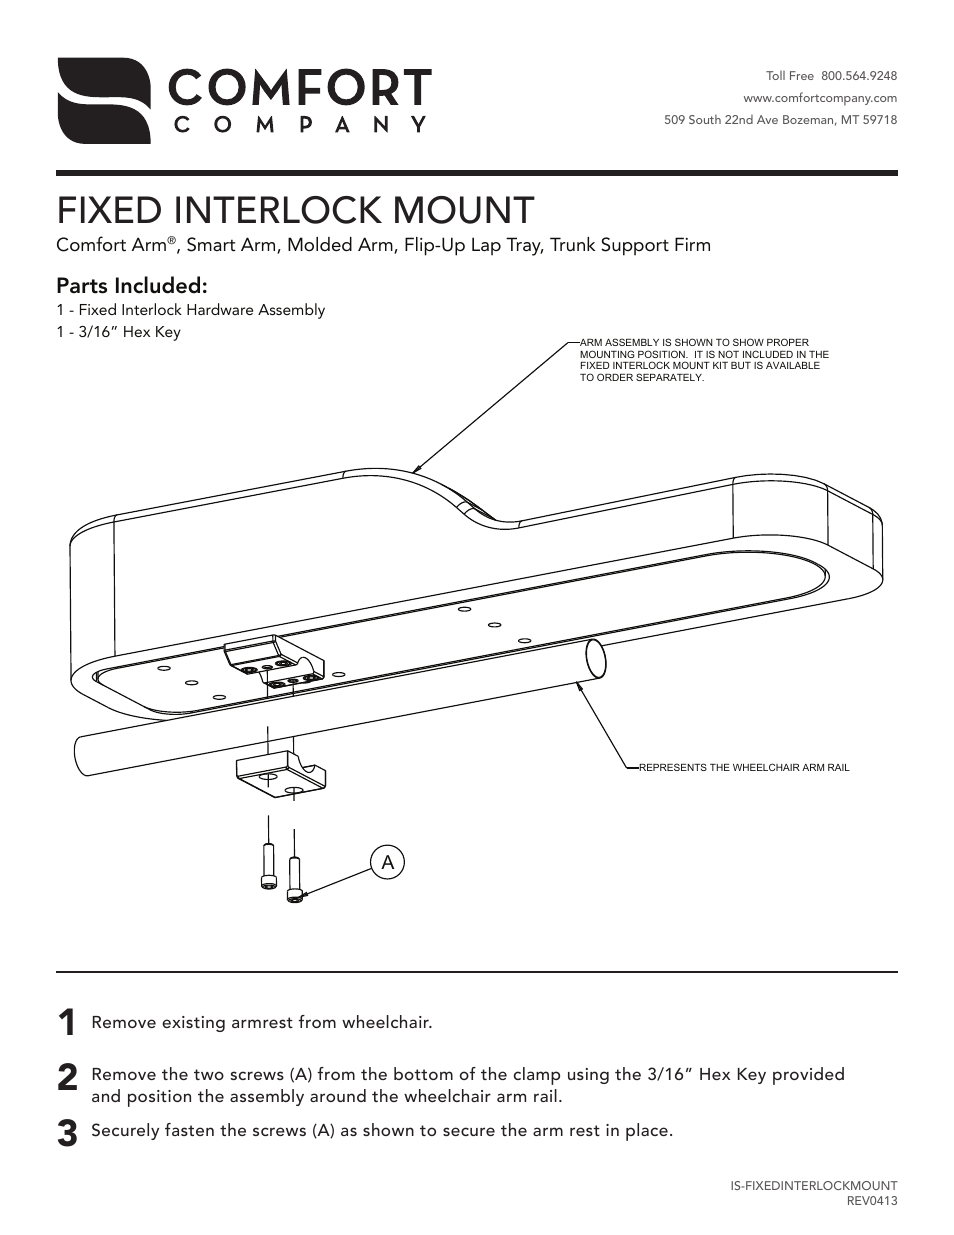 Fixed Interlock Mount